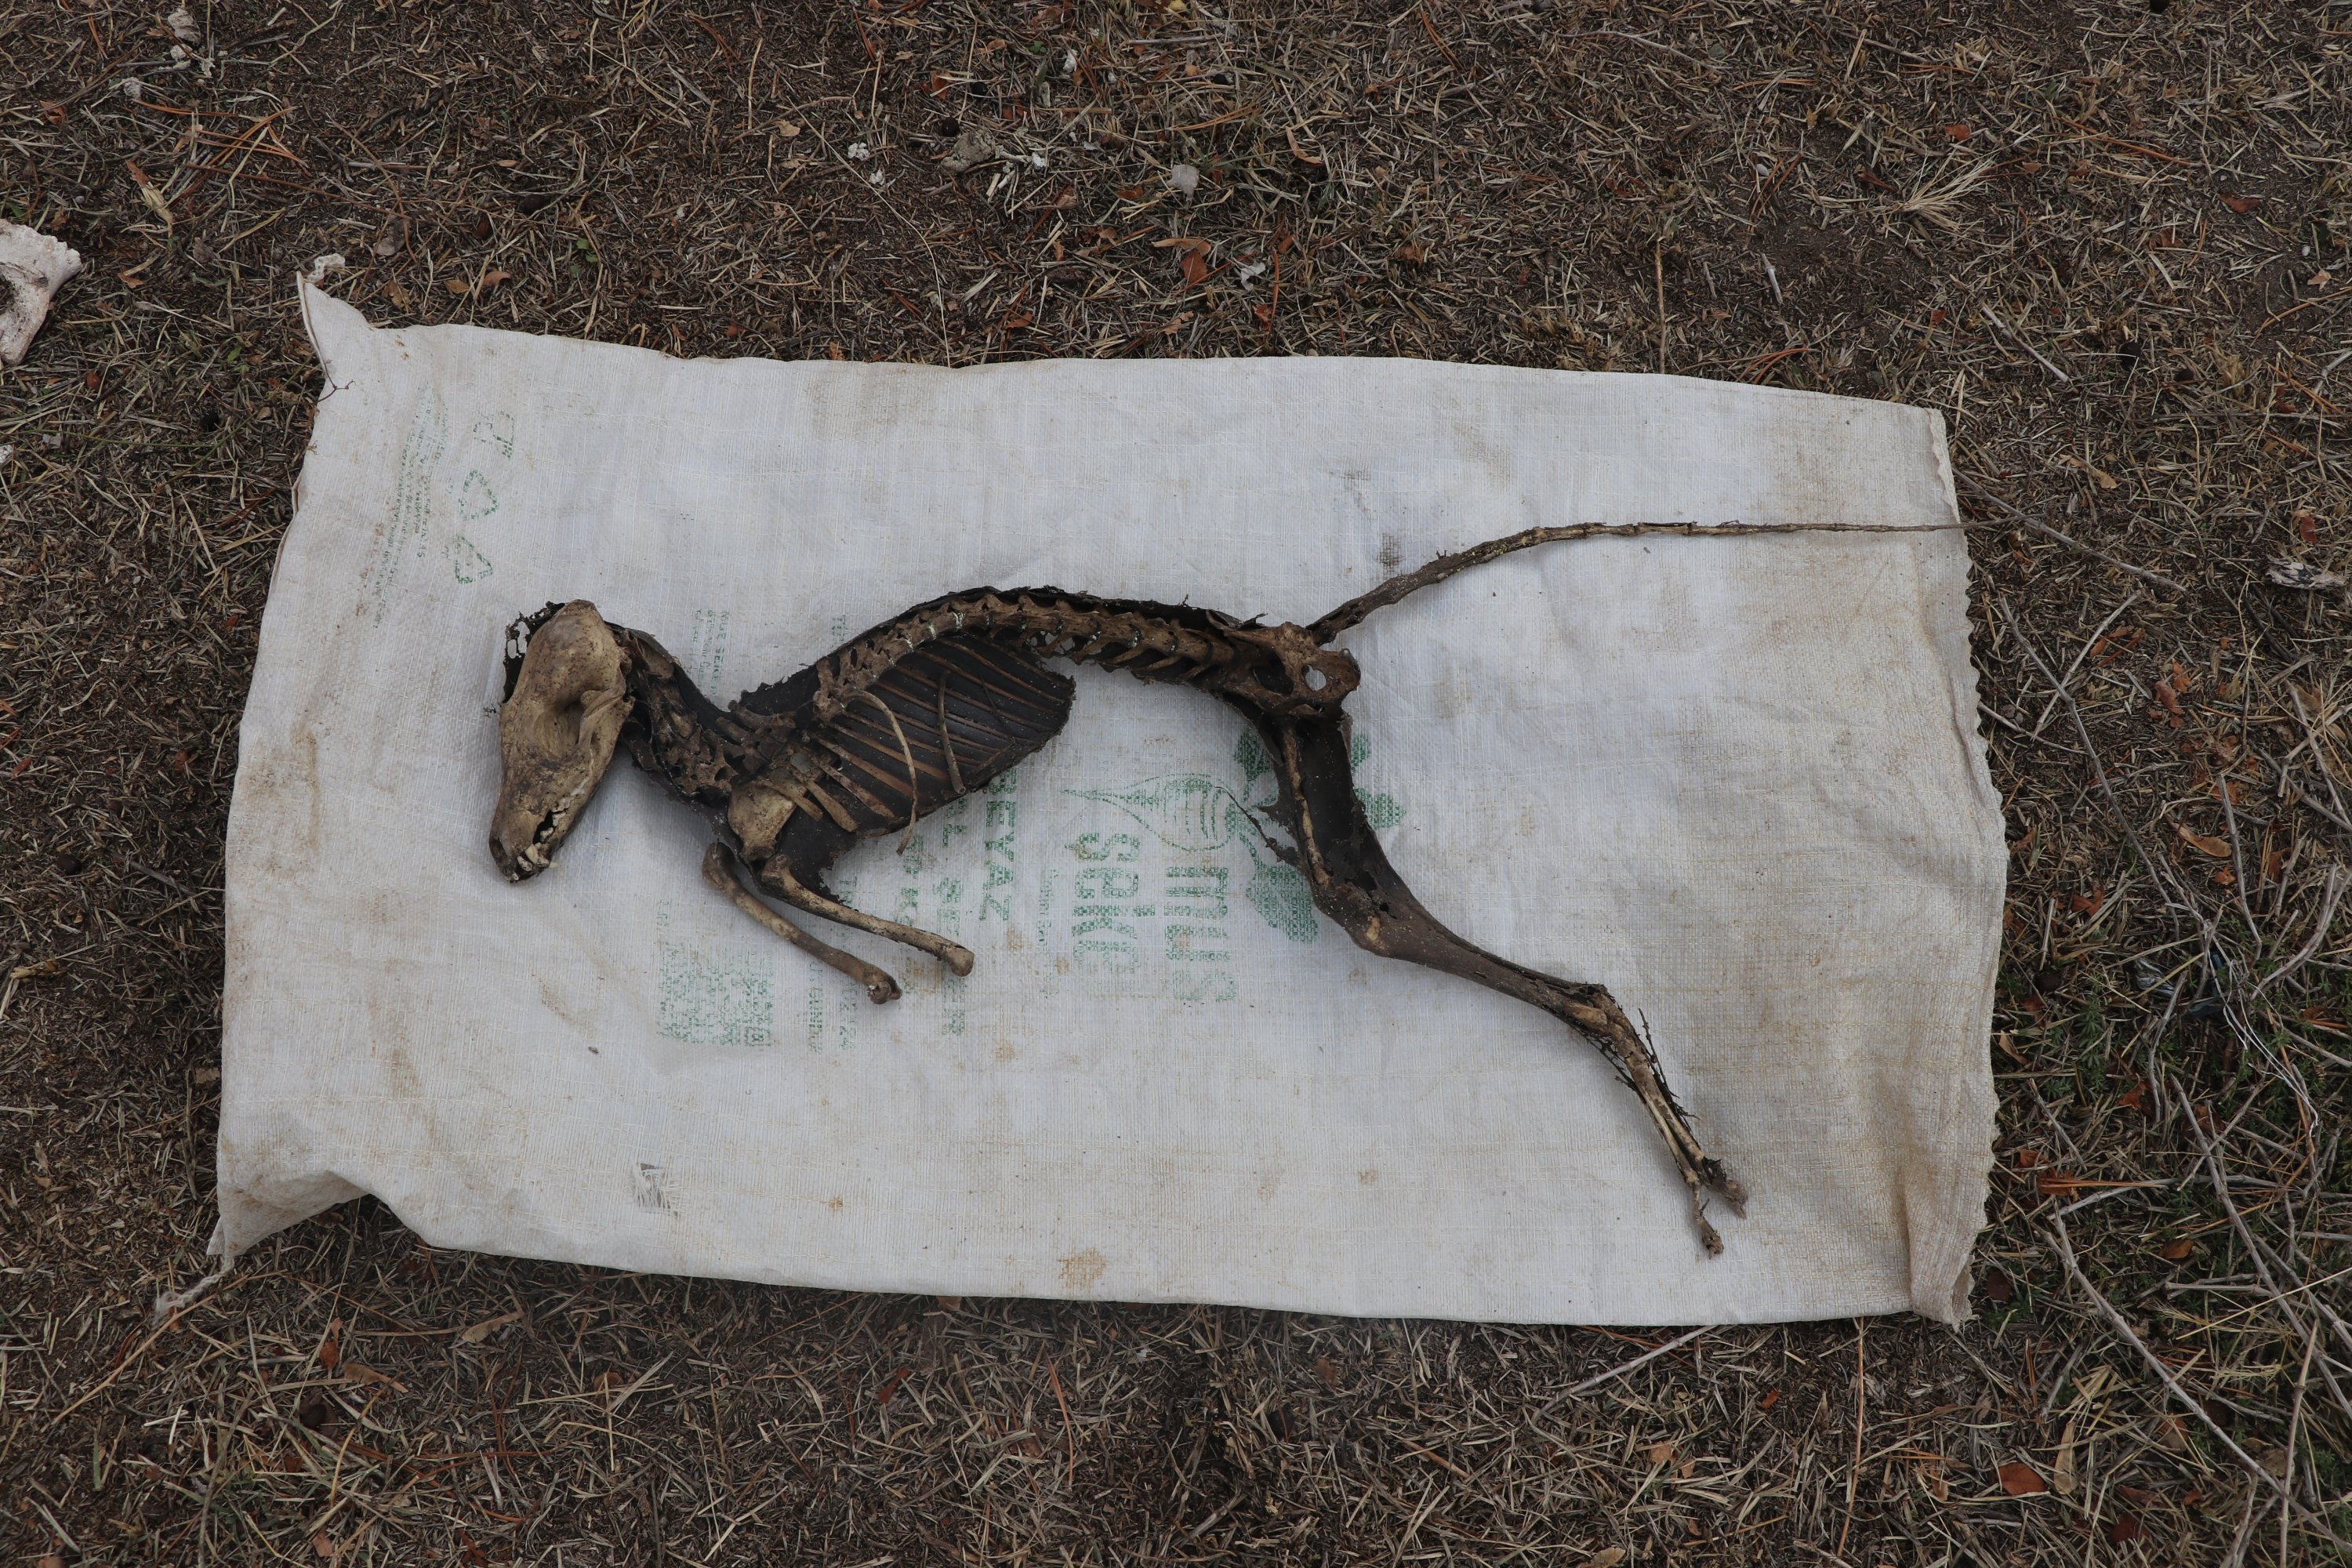 Animal skeleton of unknown species found in eastern Turkey | Daily Sabah